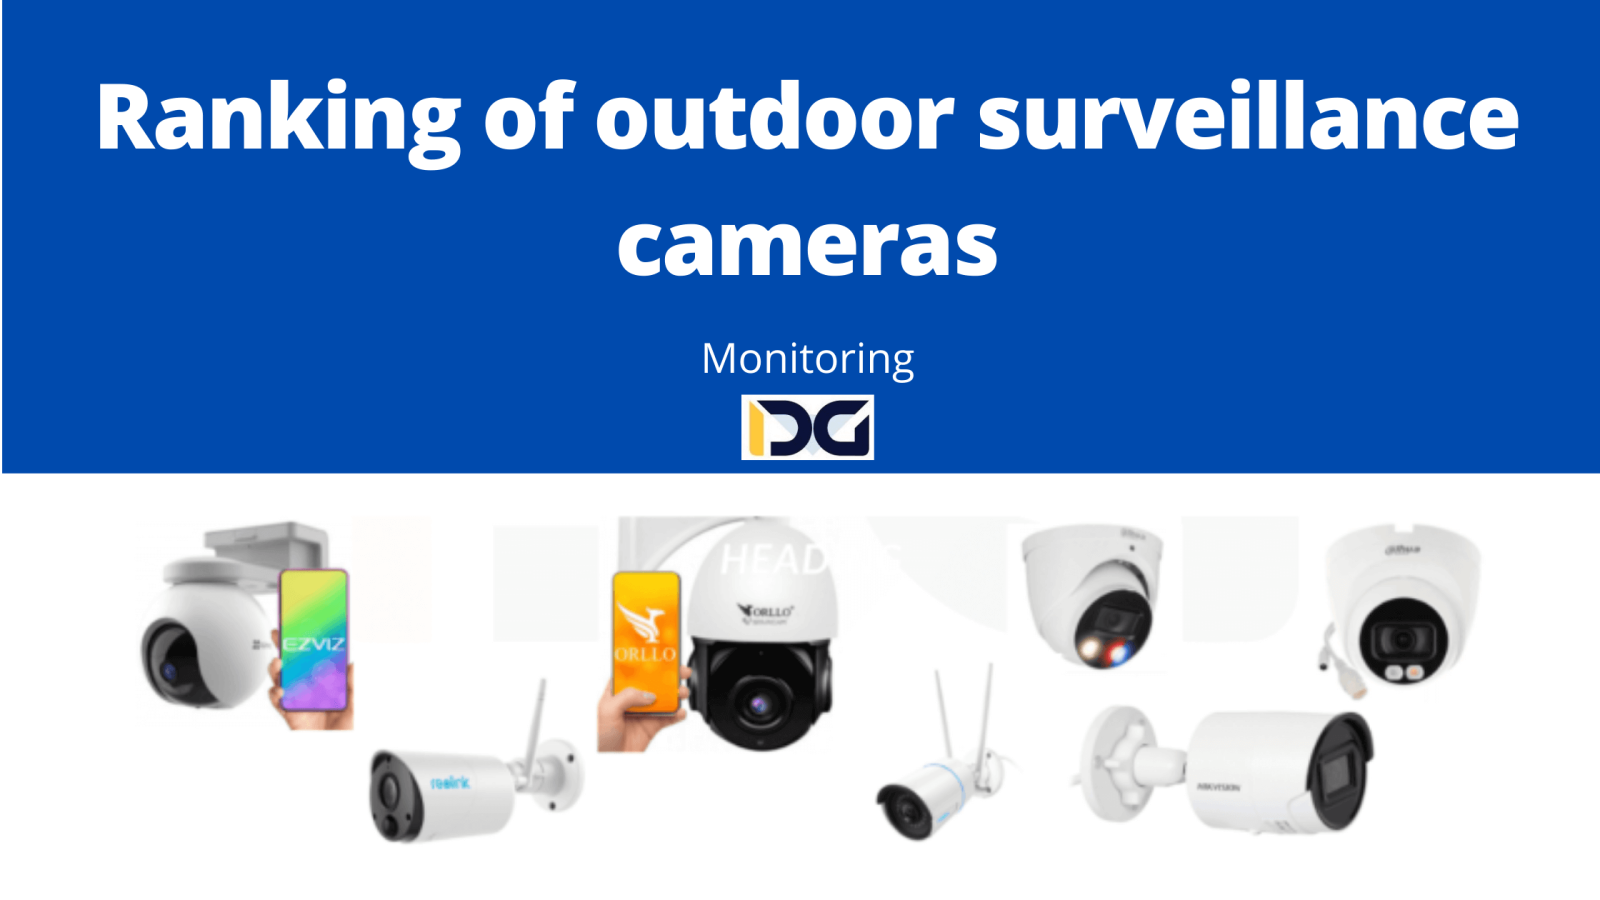 anking of outdoor surveillance cameras: TOP 8